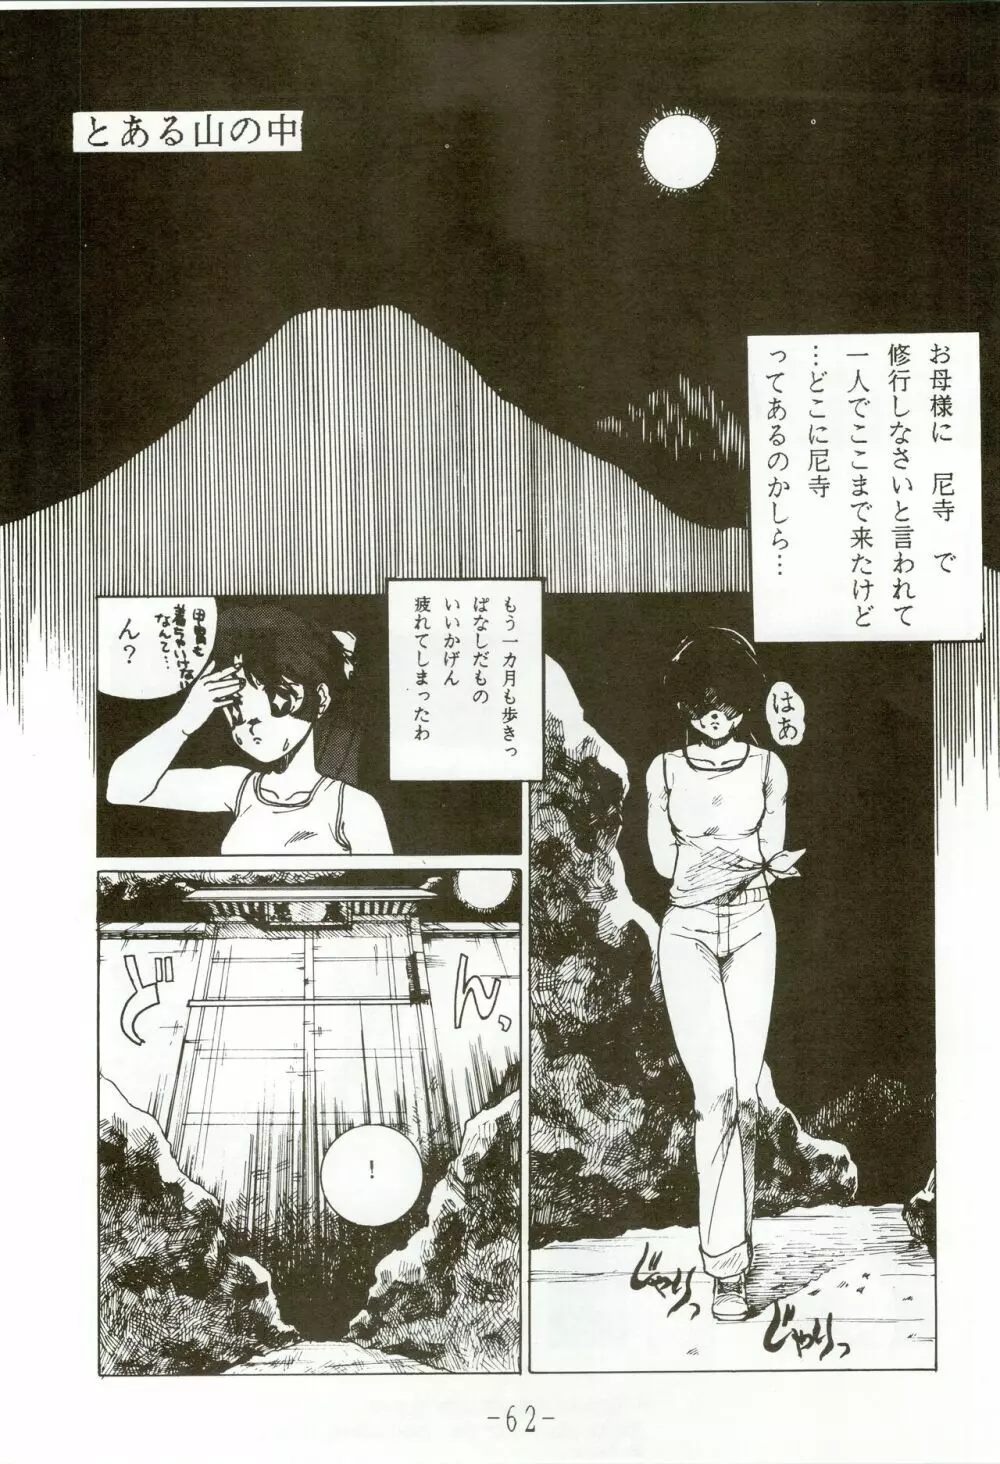 甲冑伝説 - page62